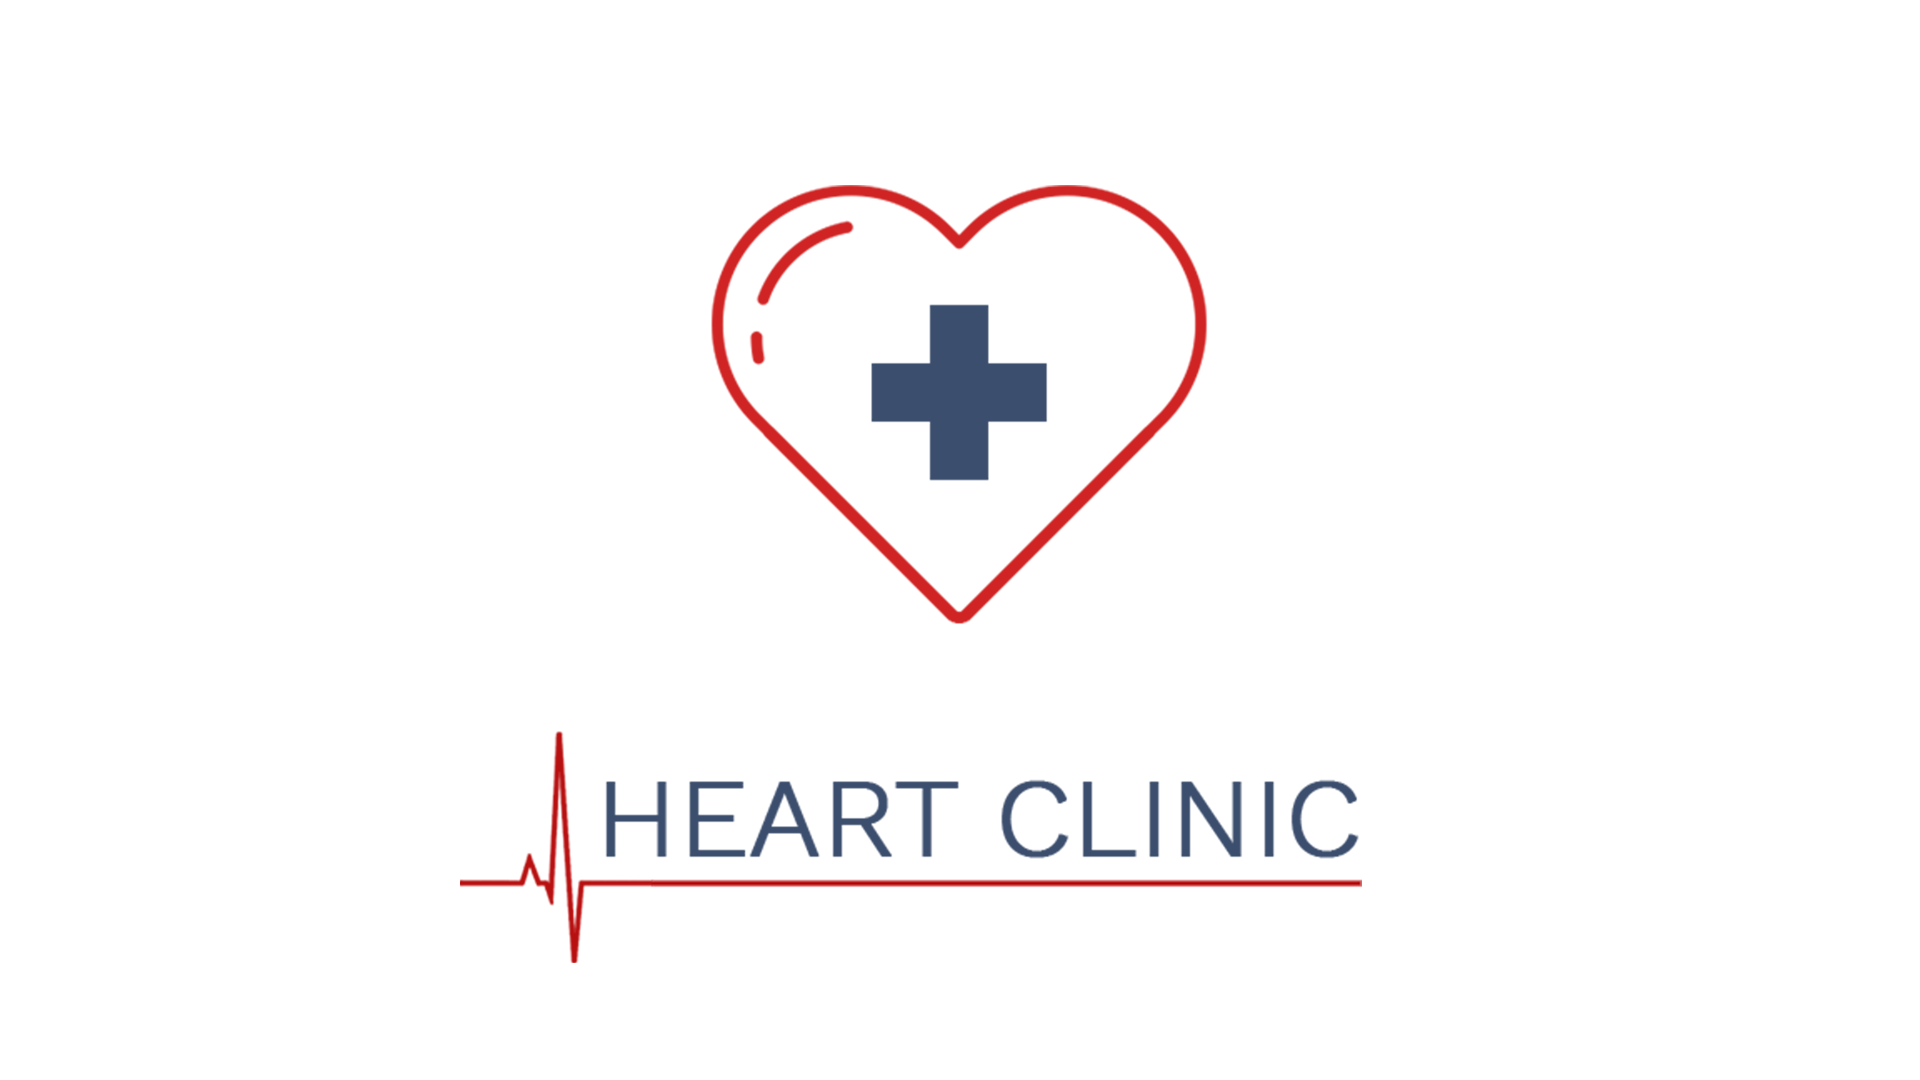 Heart Clinic by HBaddict